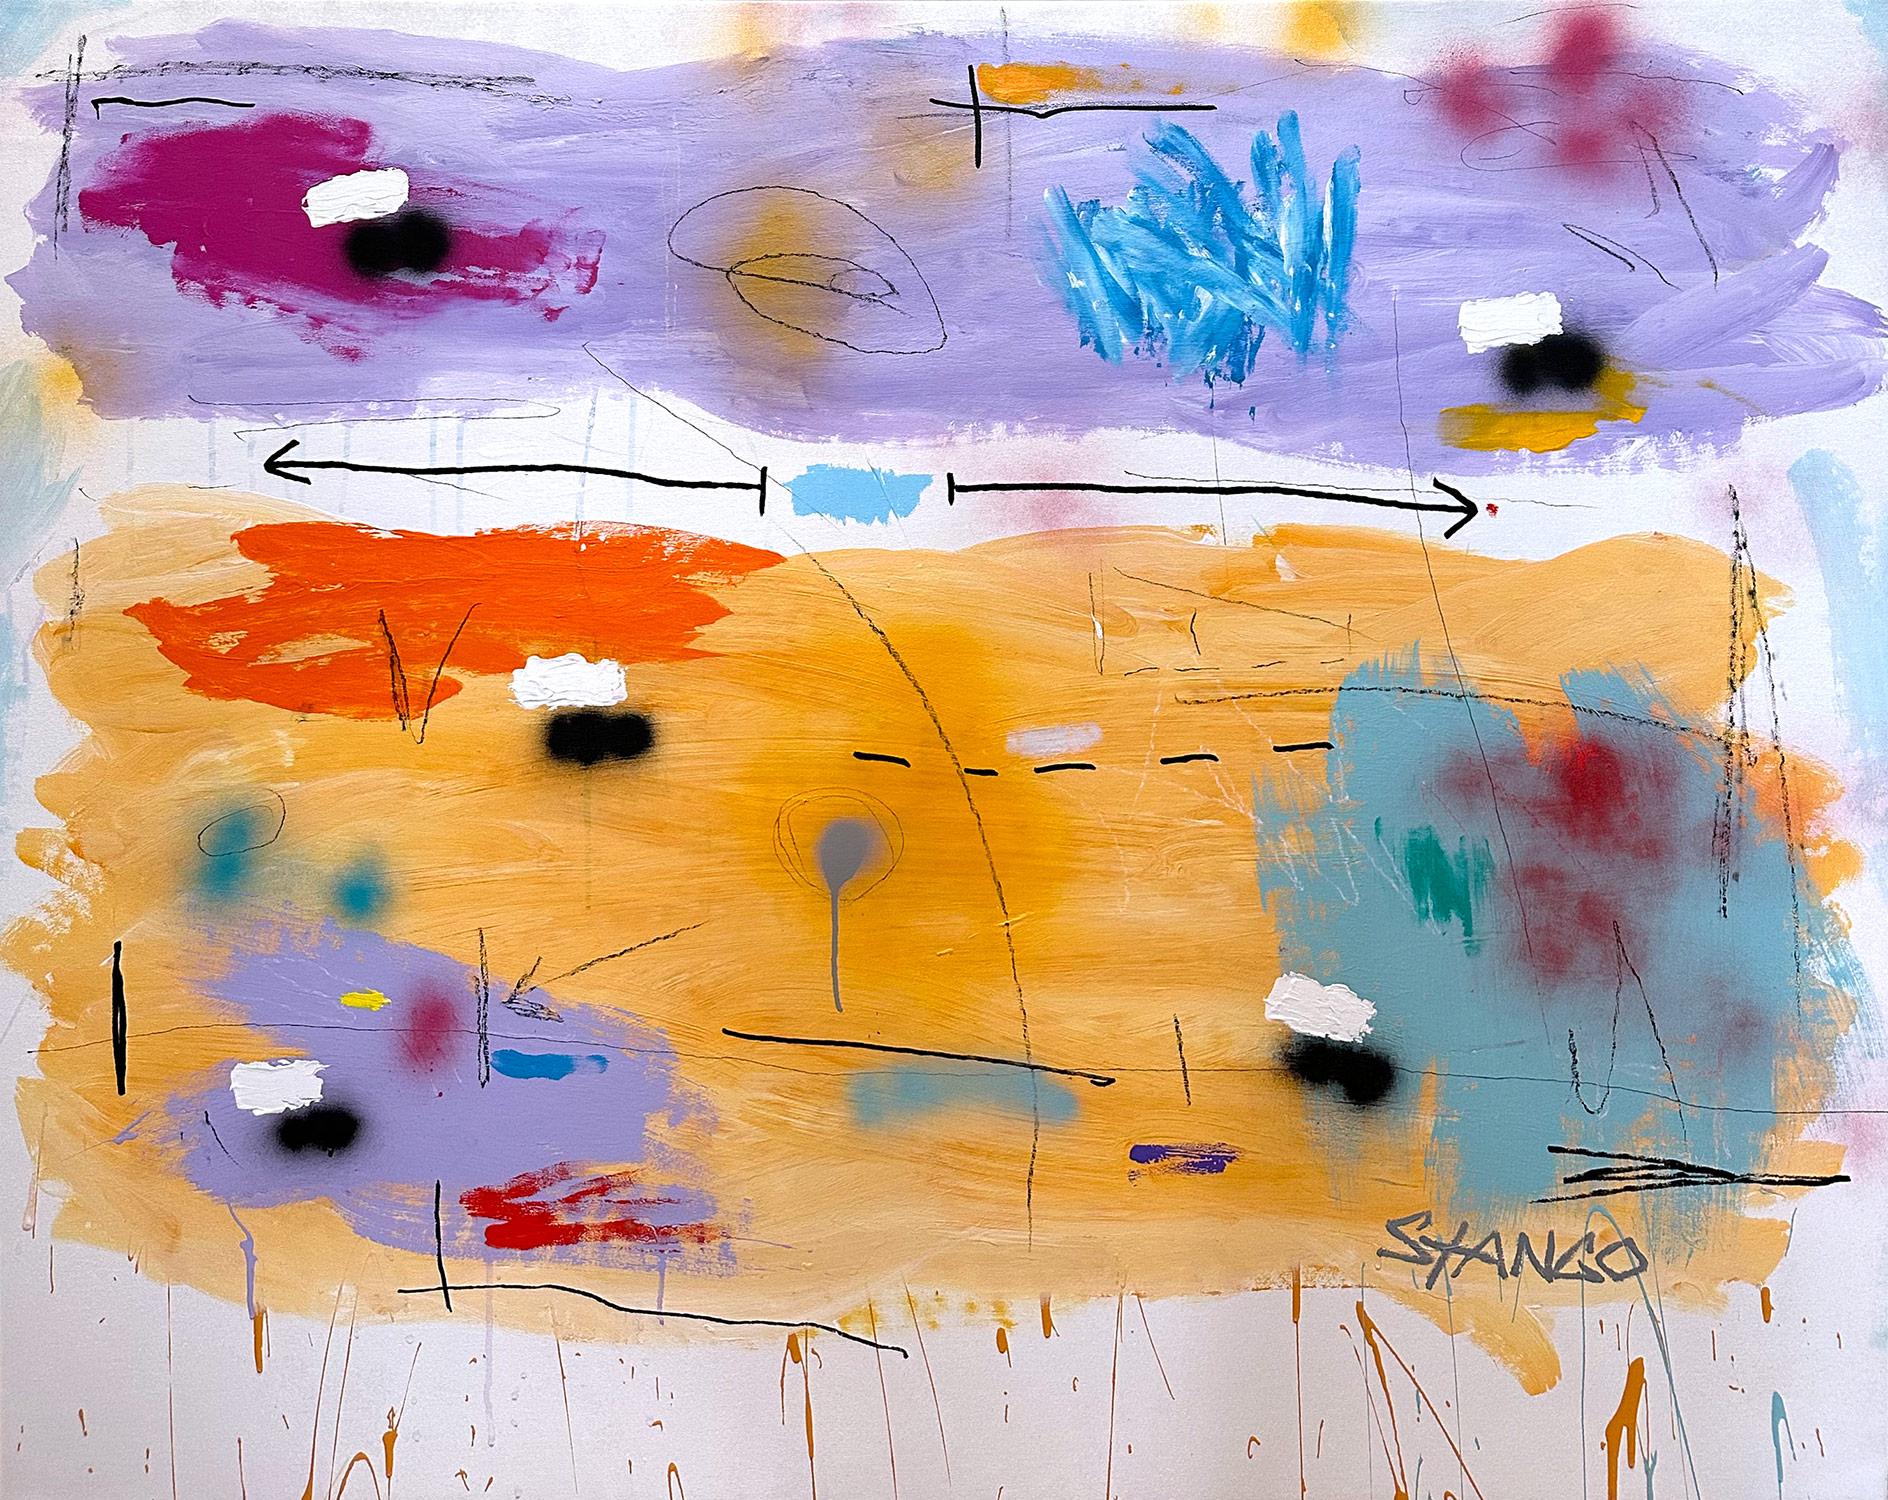 John Stango Abstract Painting – Abstraktes Pop-Art-Gemälde „High Noon“, farbenfrohe Formen mit hellem Hintergrund